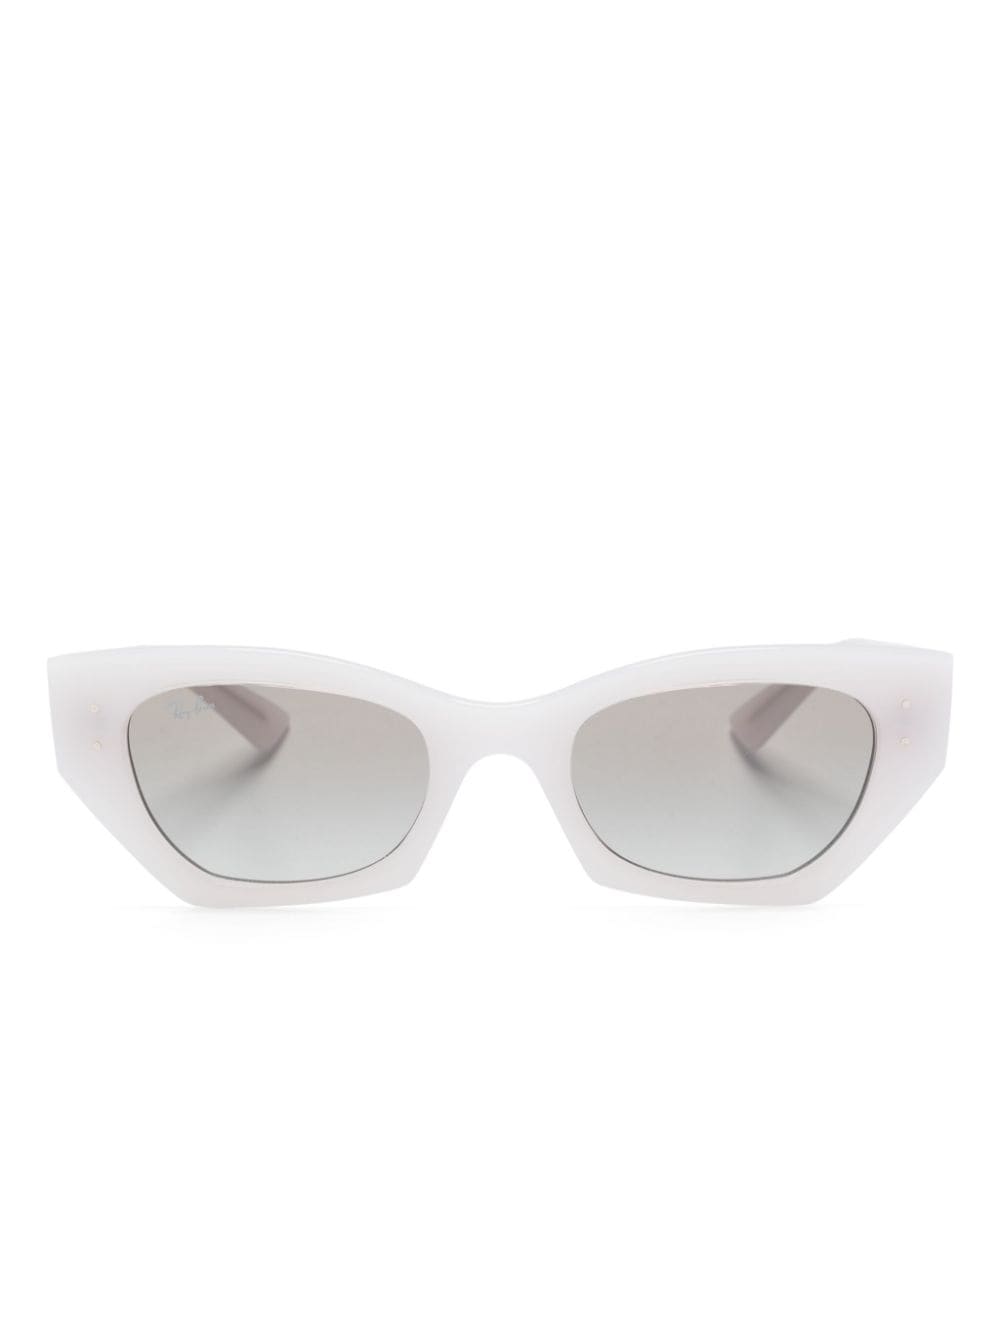 Ray-Ban Zena cat-eye sunglasses - White von Ray-Ban